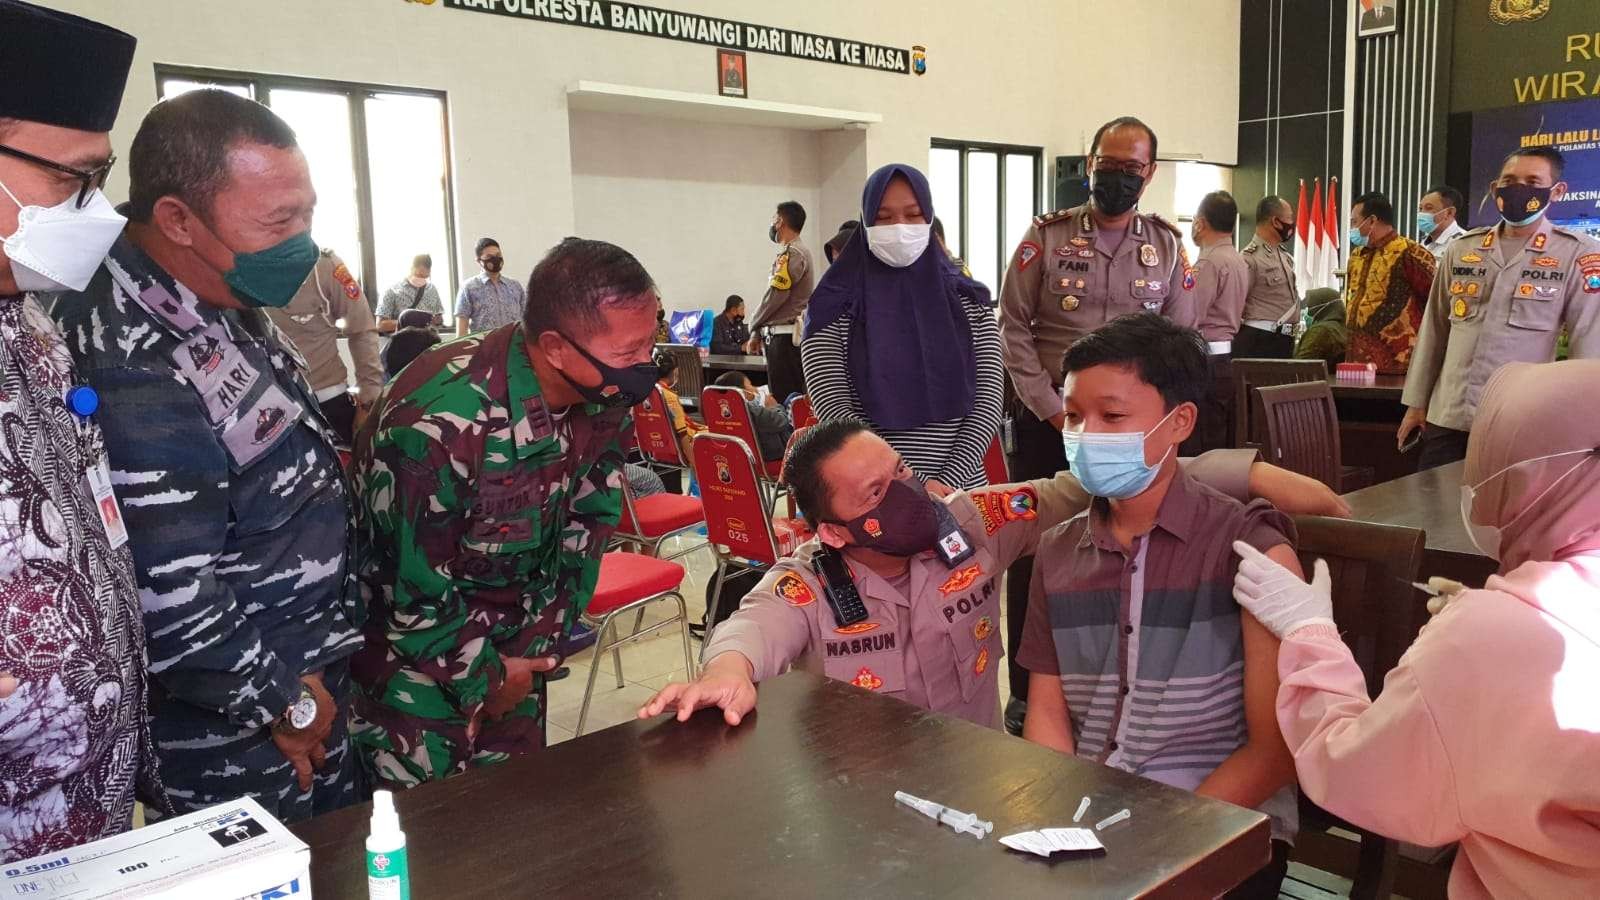 Kapolresta Banyuwangi AKBP Nasrun Pasaribu mendampingi salah seorang anak yatim menjalani vaksinasi Covid-19. (Foto: Istimewa)